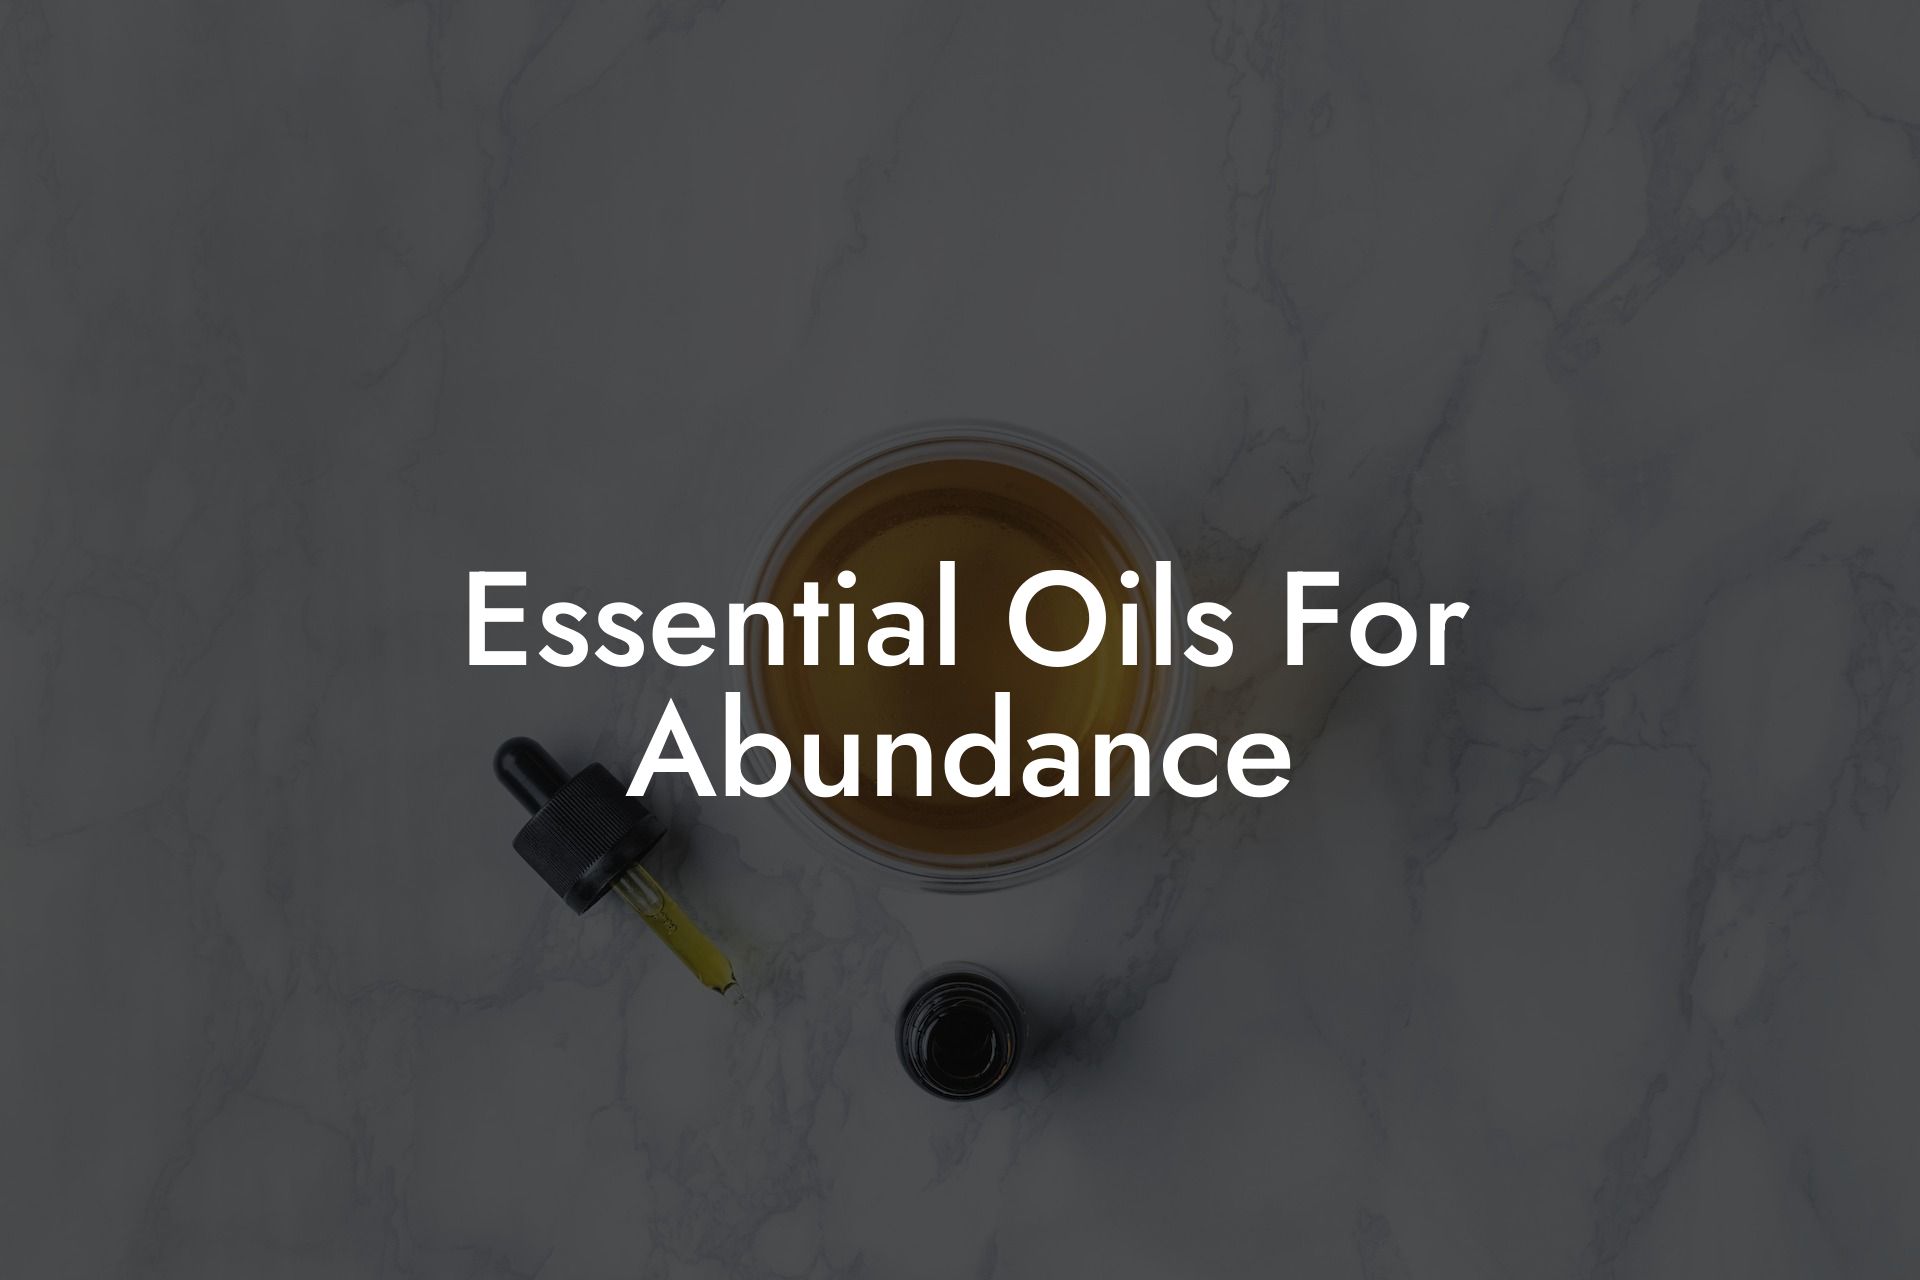 Essential Oils For Abundance